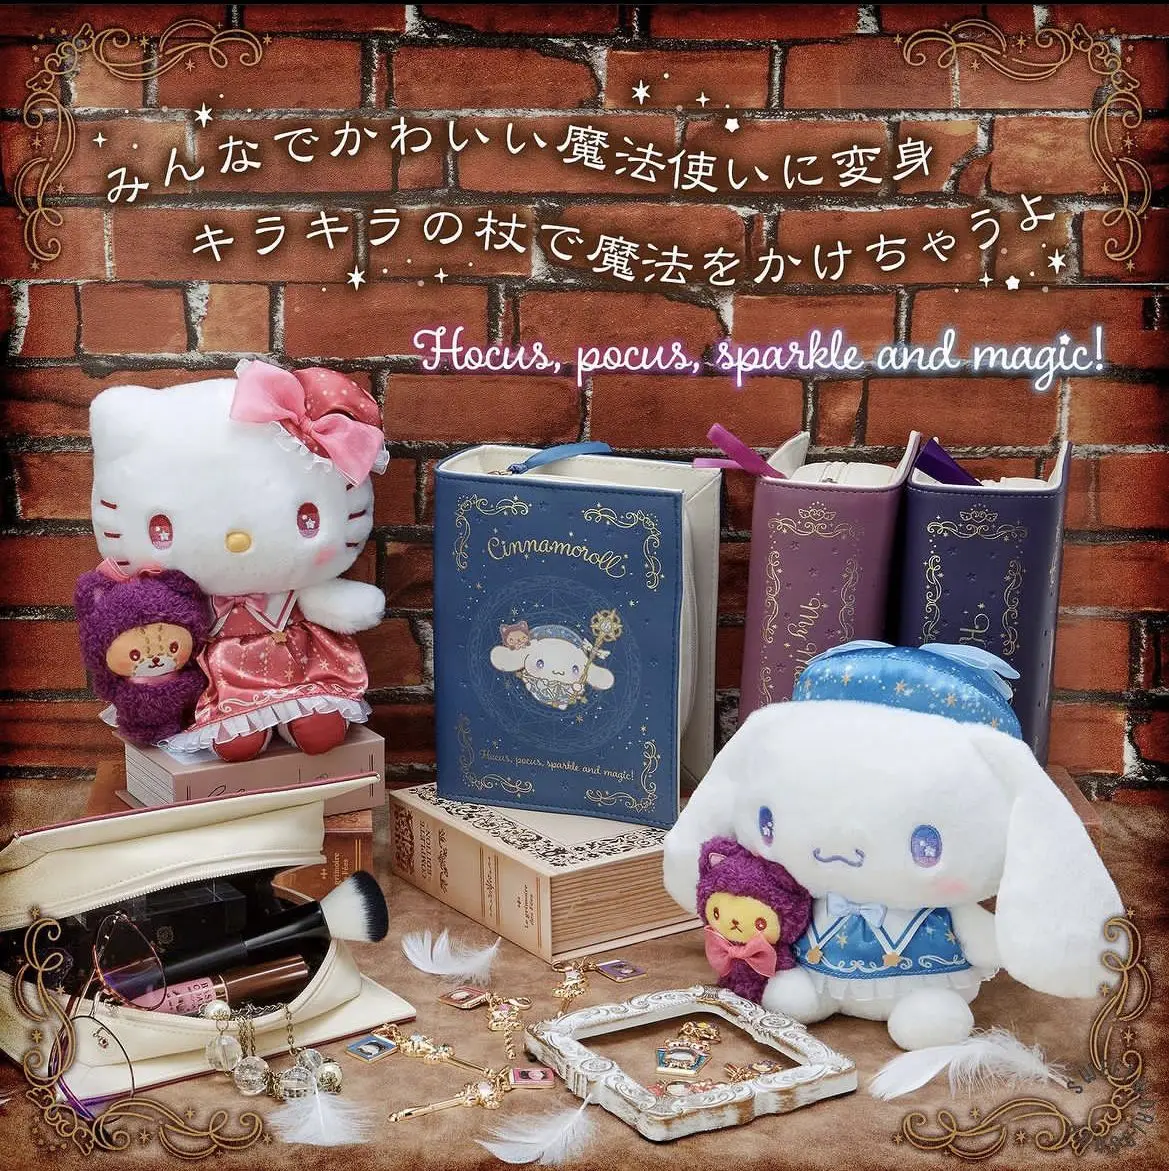 New Sanrio Anime hellokykitty Kulomi Cinnamoroll Cartoon Cosmetic Bag Girly Heart Kawaii Magic Book Styling pochette regalo coppia